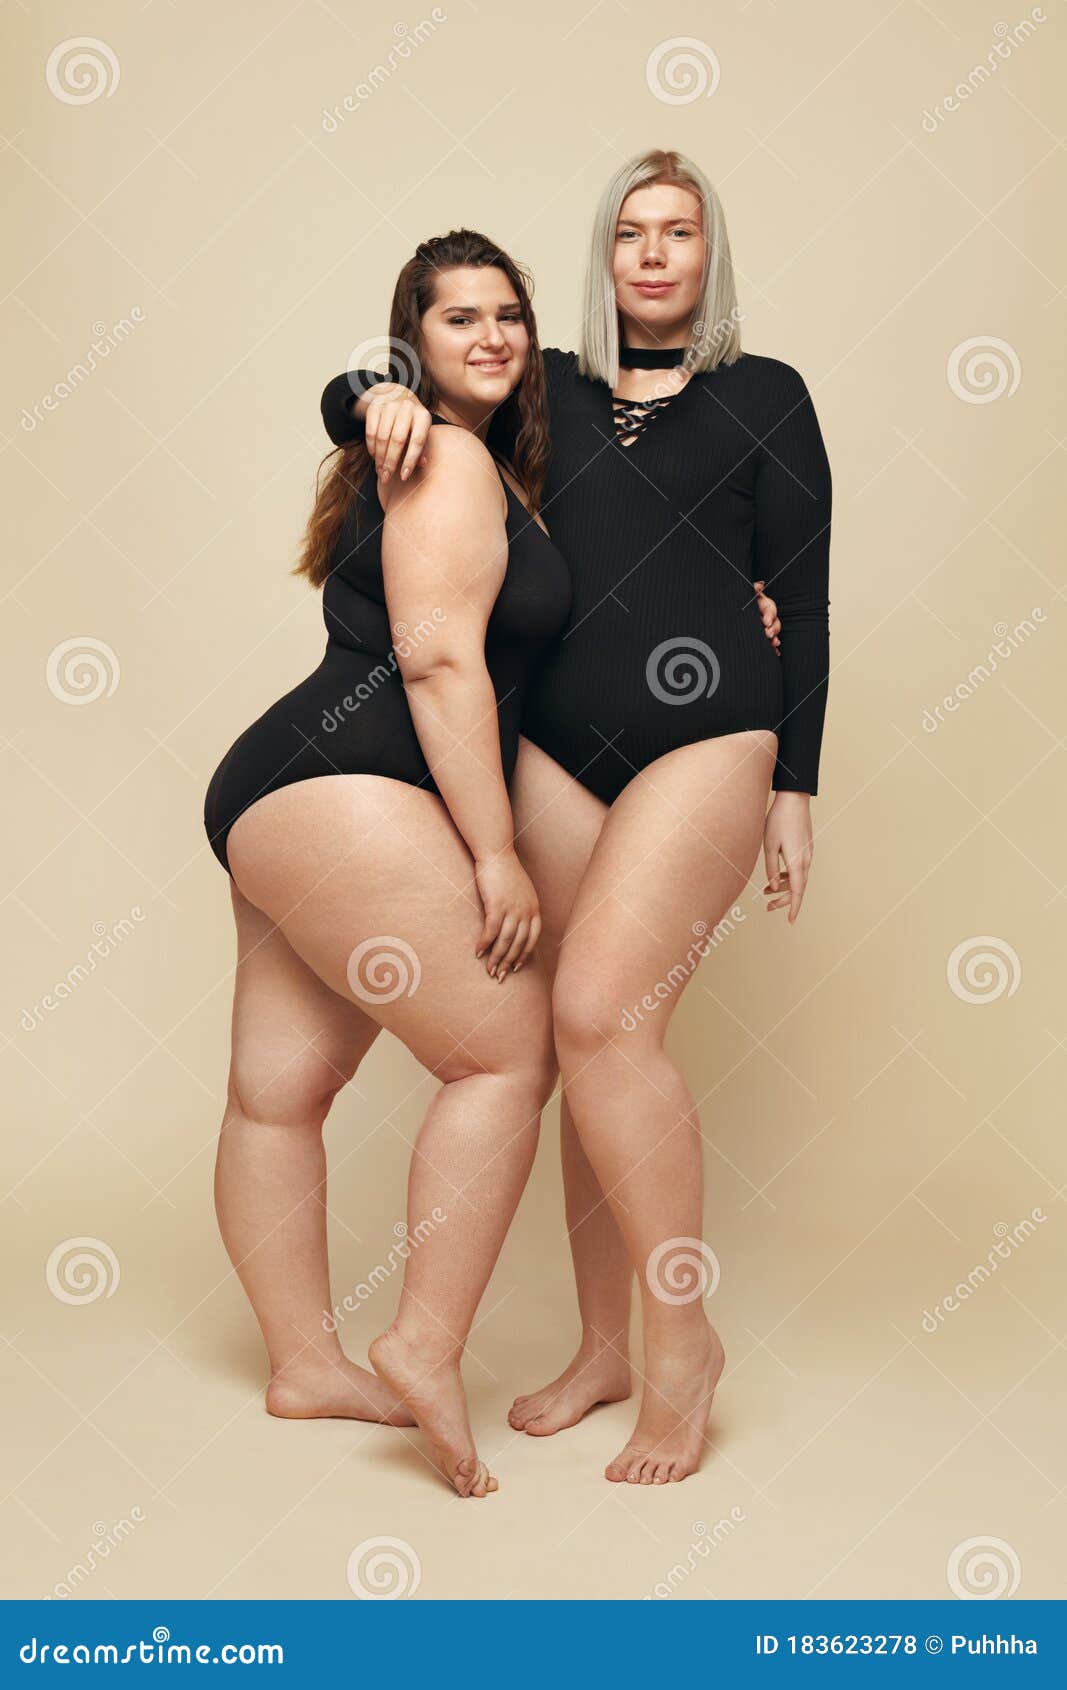 Plus Size Models. Full-figured Women Full-length Portrait. Brunette and Blonde in Black Bodysuits Posing on Beige Stock Photo Image of fashion, female: 183623278